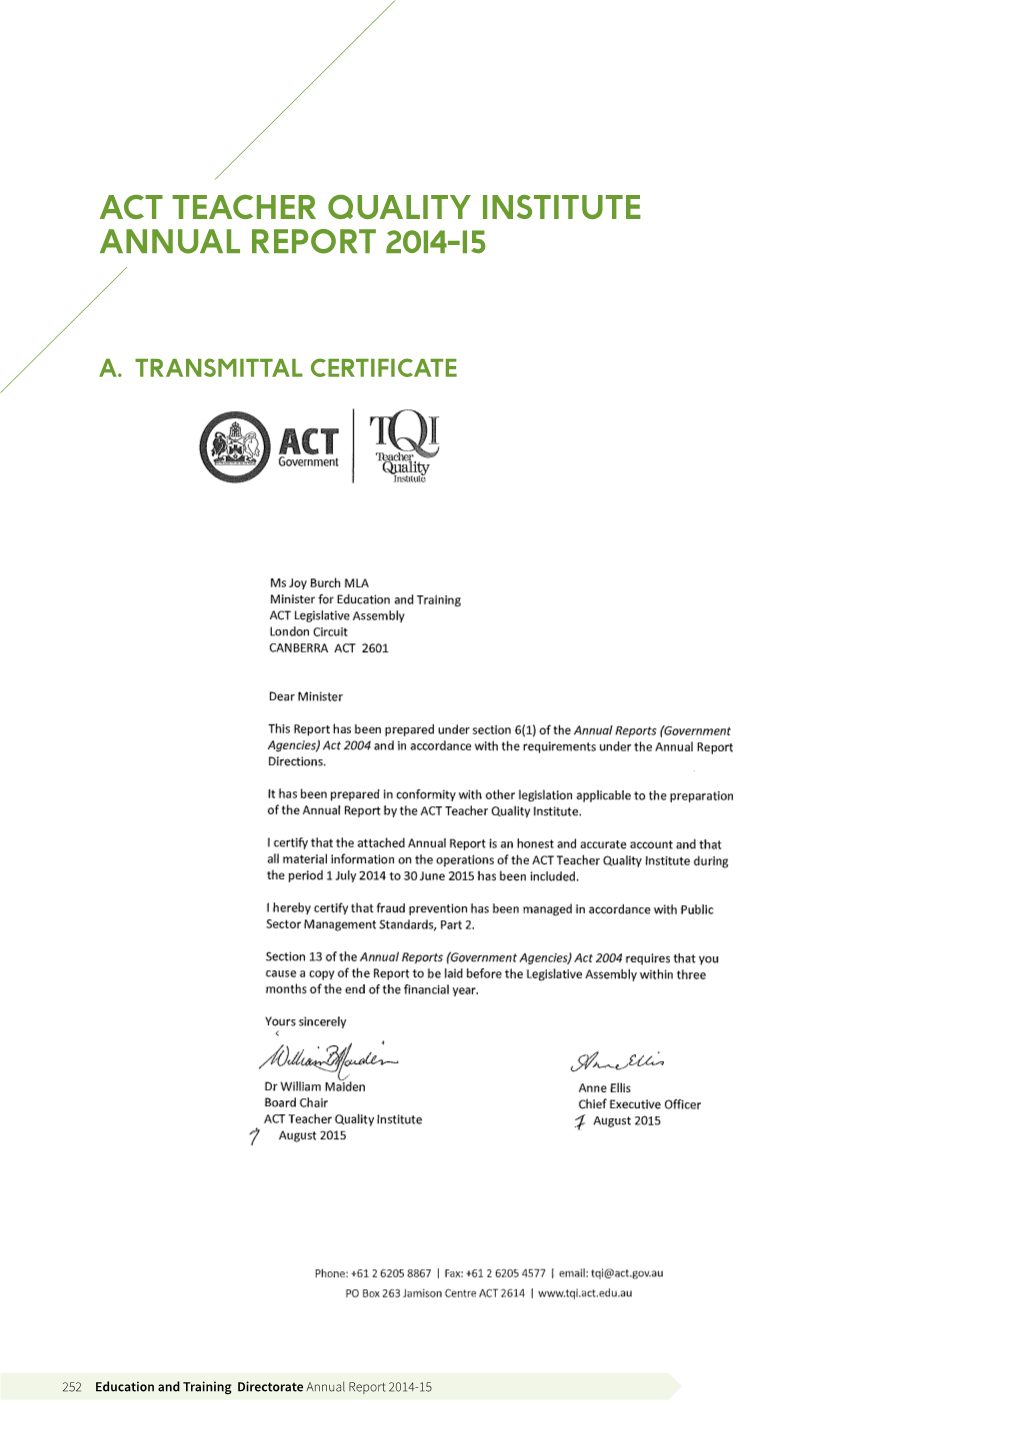 TQI Annual Report 2014-15